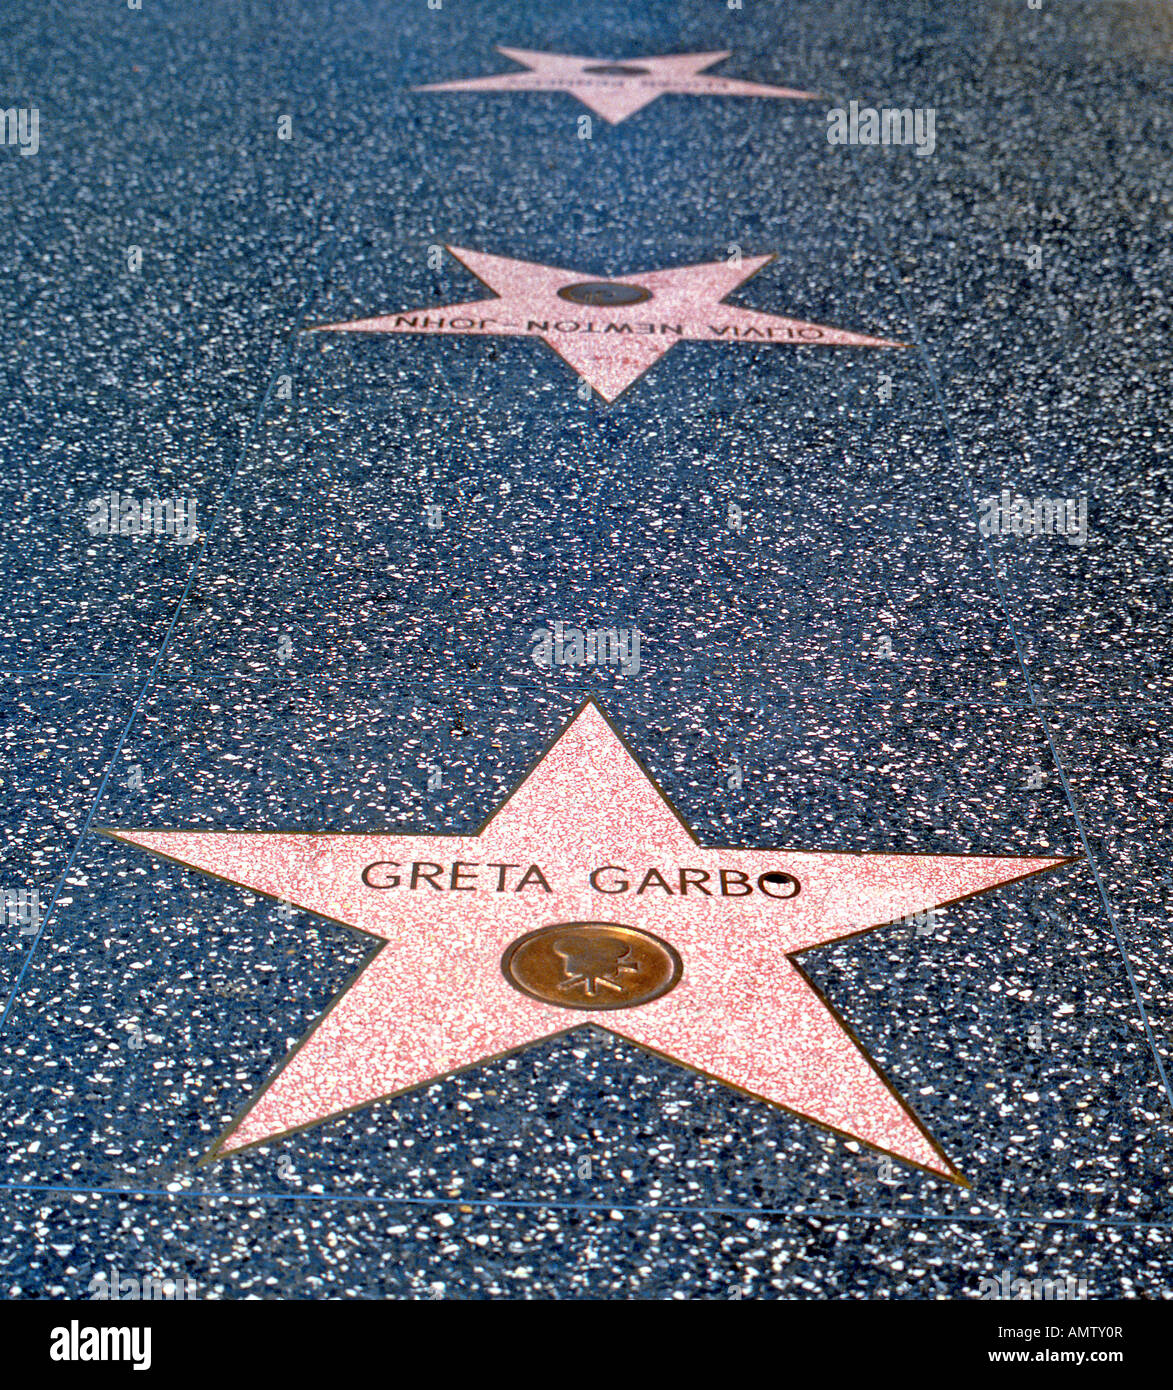 Greta Garbo's étoile sur le Hollywood Walk of Fame, Hollywood Boulevard, Los Angeles, USA Banque D'Images